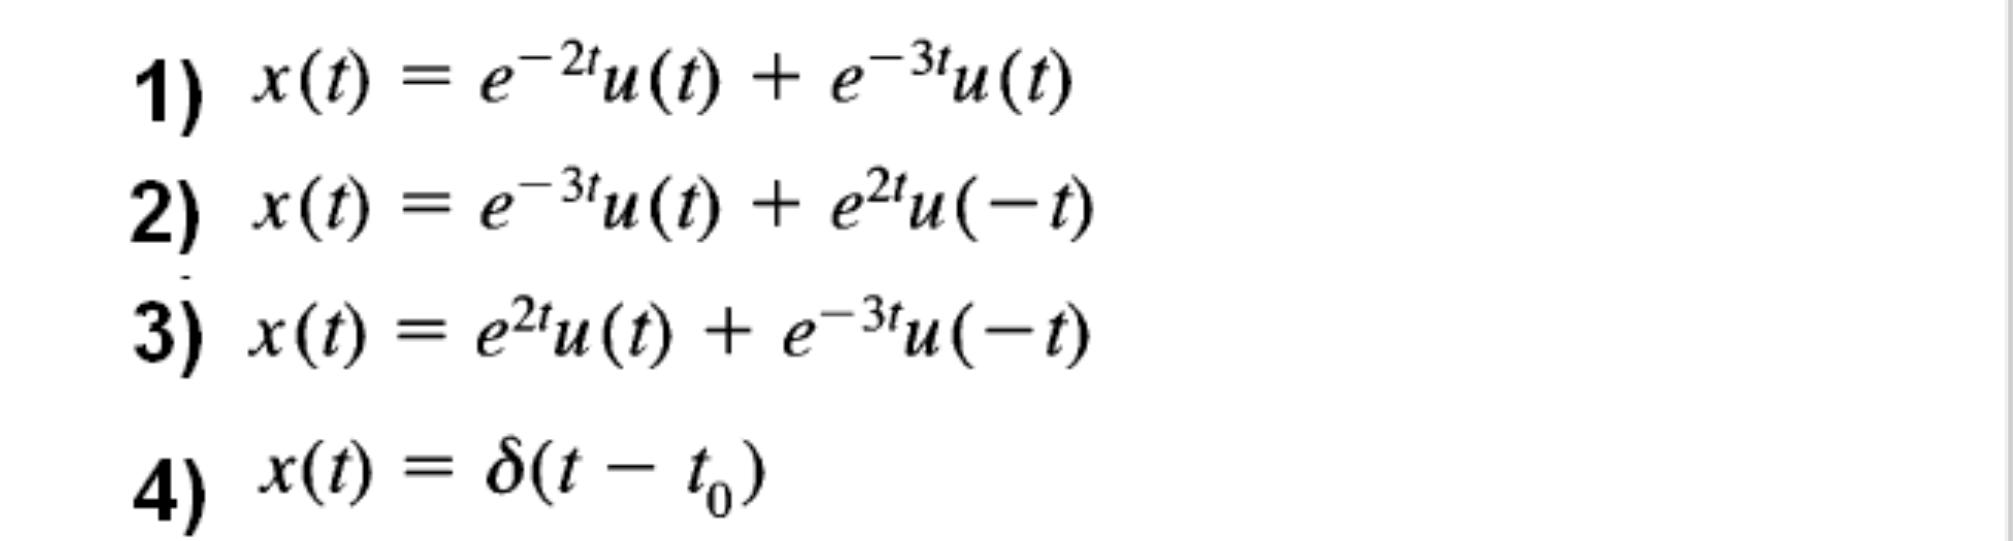 1) X(t) = e-2u(t) + e-3u(t) 2) X(t) = e-3tu(t) + elu(-1) 3) r(t) = e2tu(t) + e-3tu(-t) 4) X(t) = o(t – )